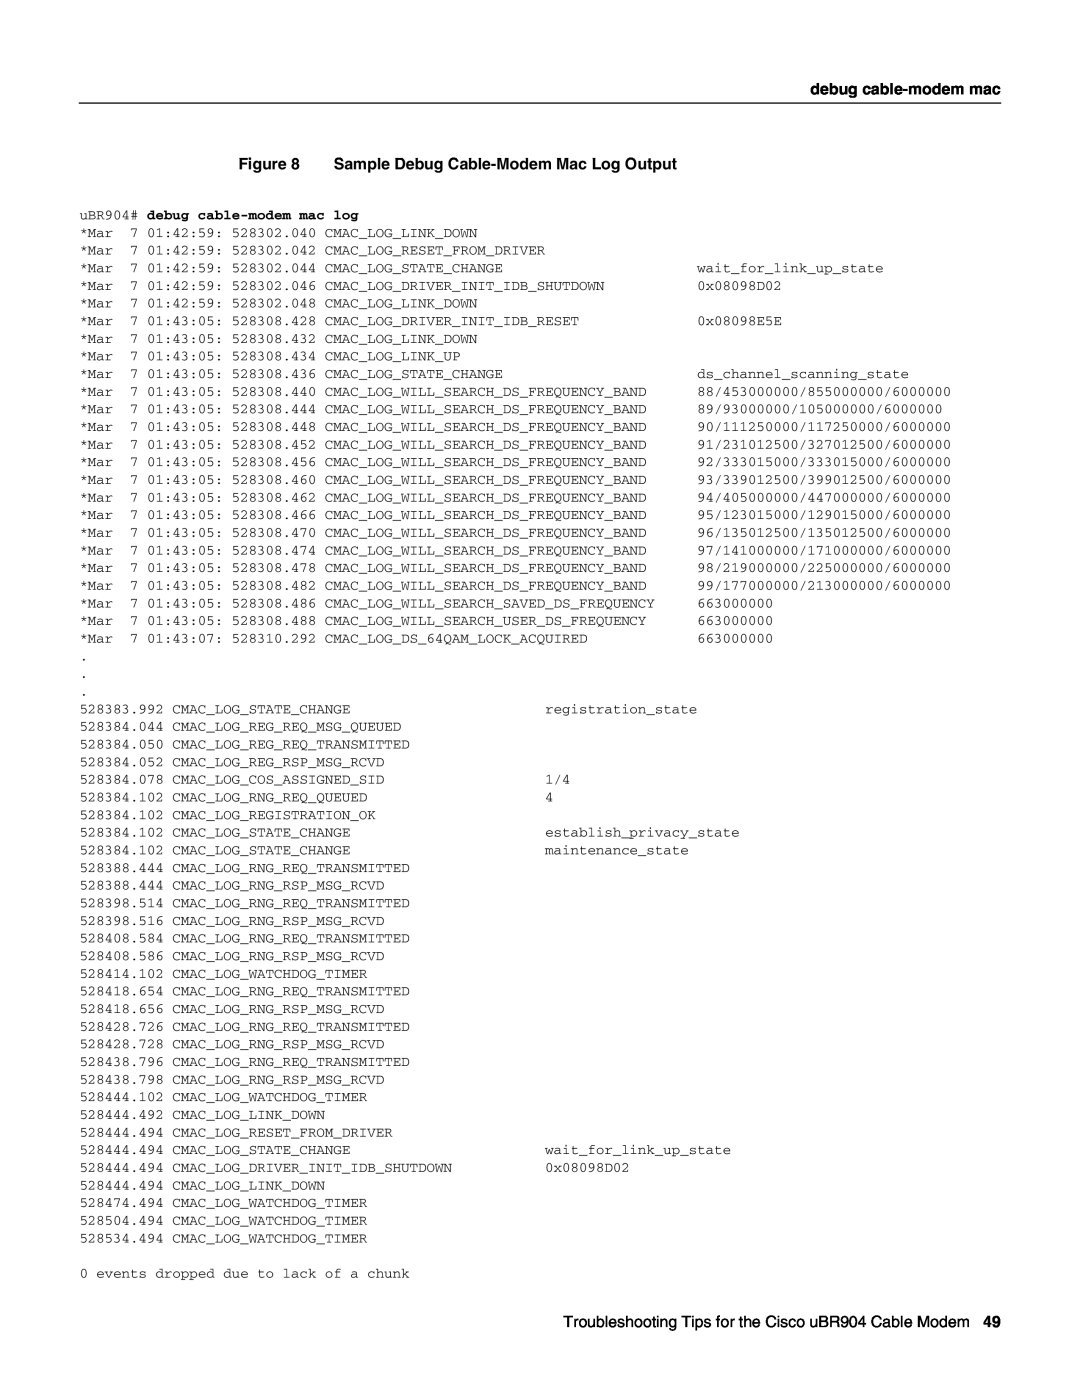 Cisco Systems UBR904 manual Sample Debug Cable-Modem Mac Log Output, uBR904# debug cable-modem mac log 